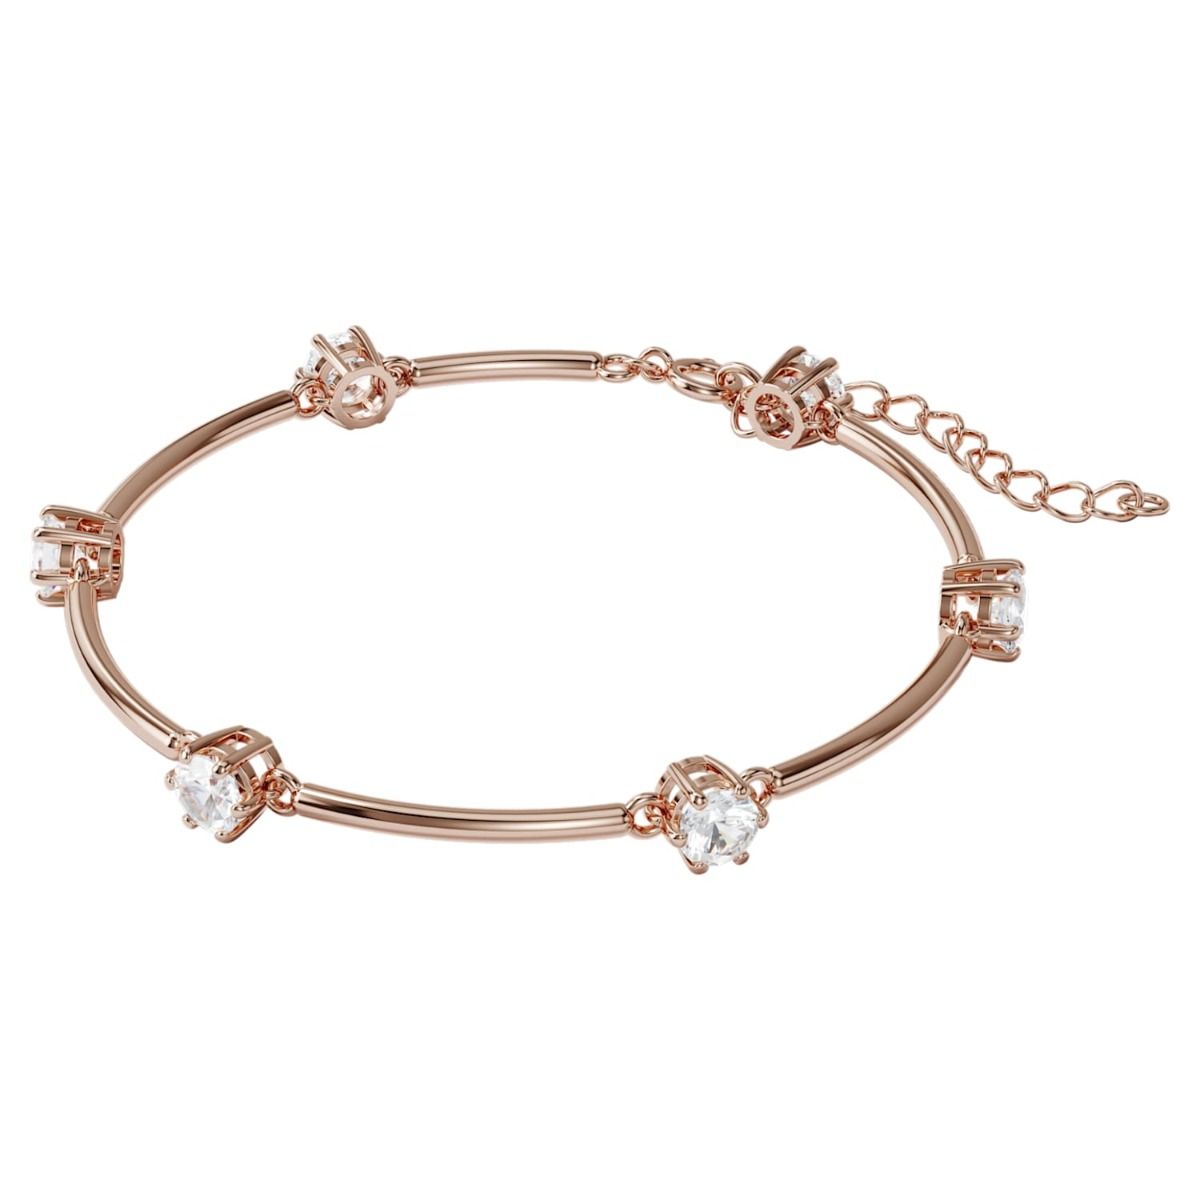 Buy Swarovski Constella Bracelet - Rose Gold Tone Plated Online